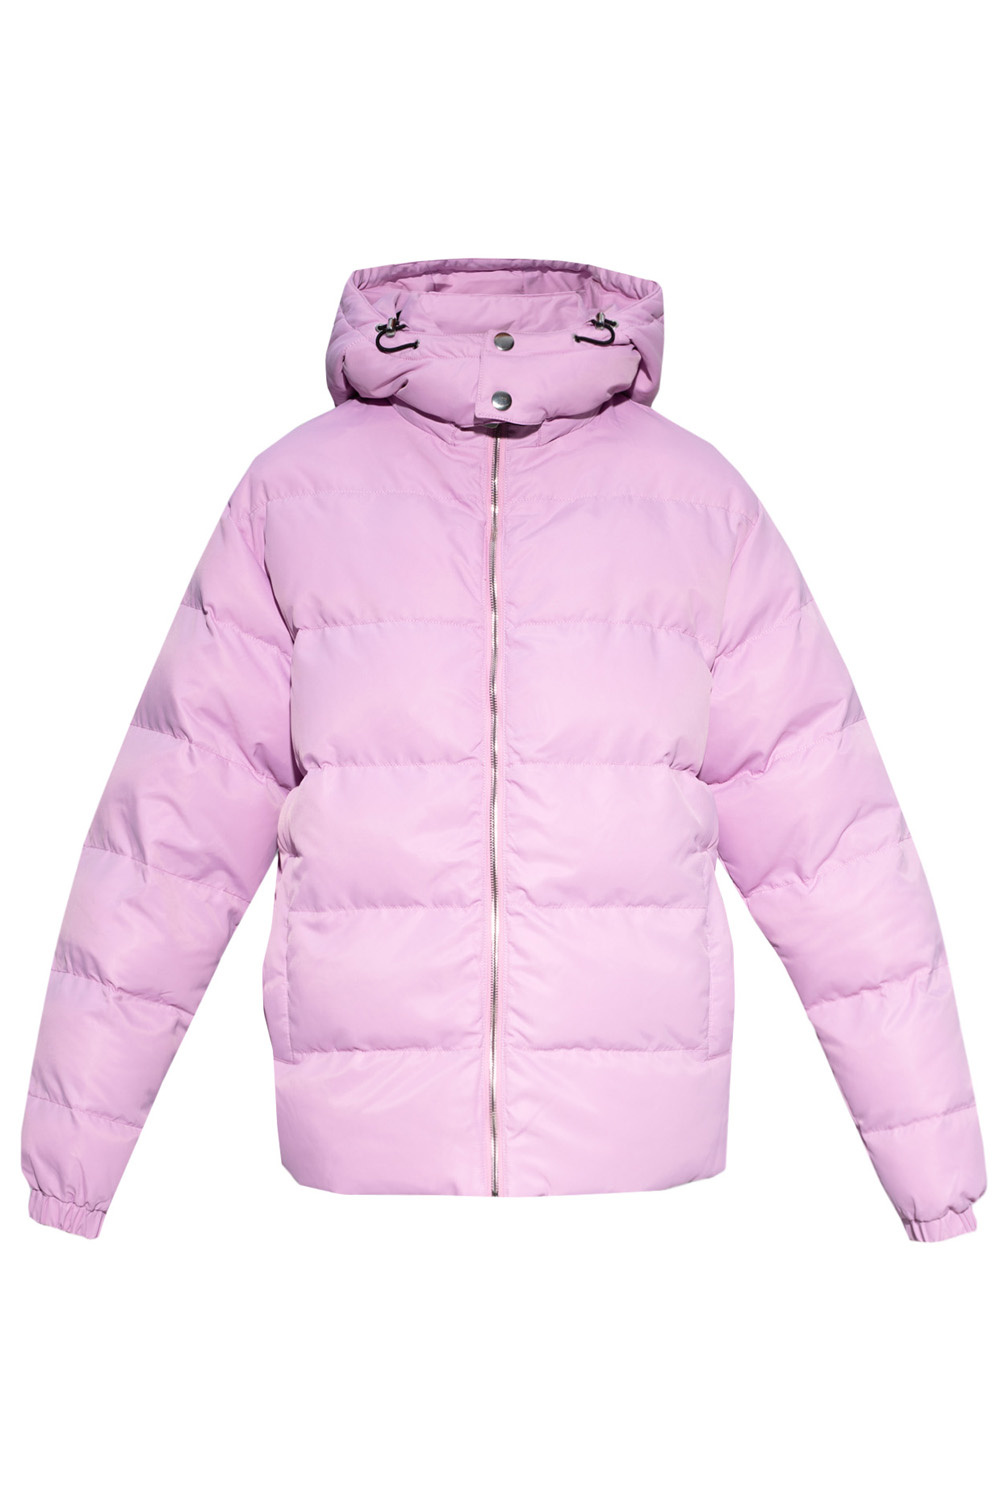 1017 ALYX 9SM Insulated hooded jacket | Women's Clothing | Vitkac